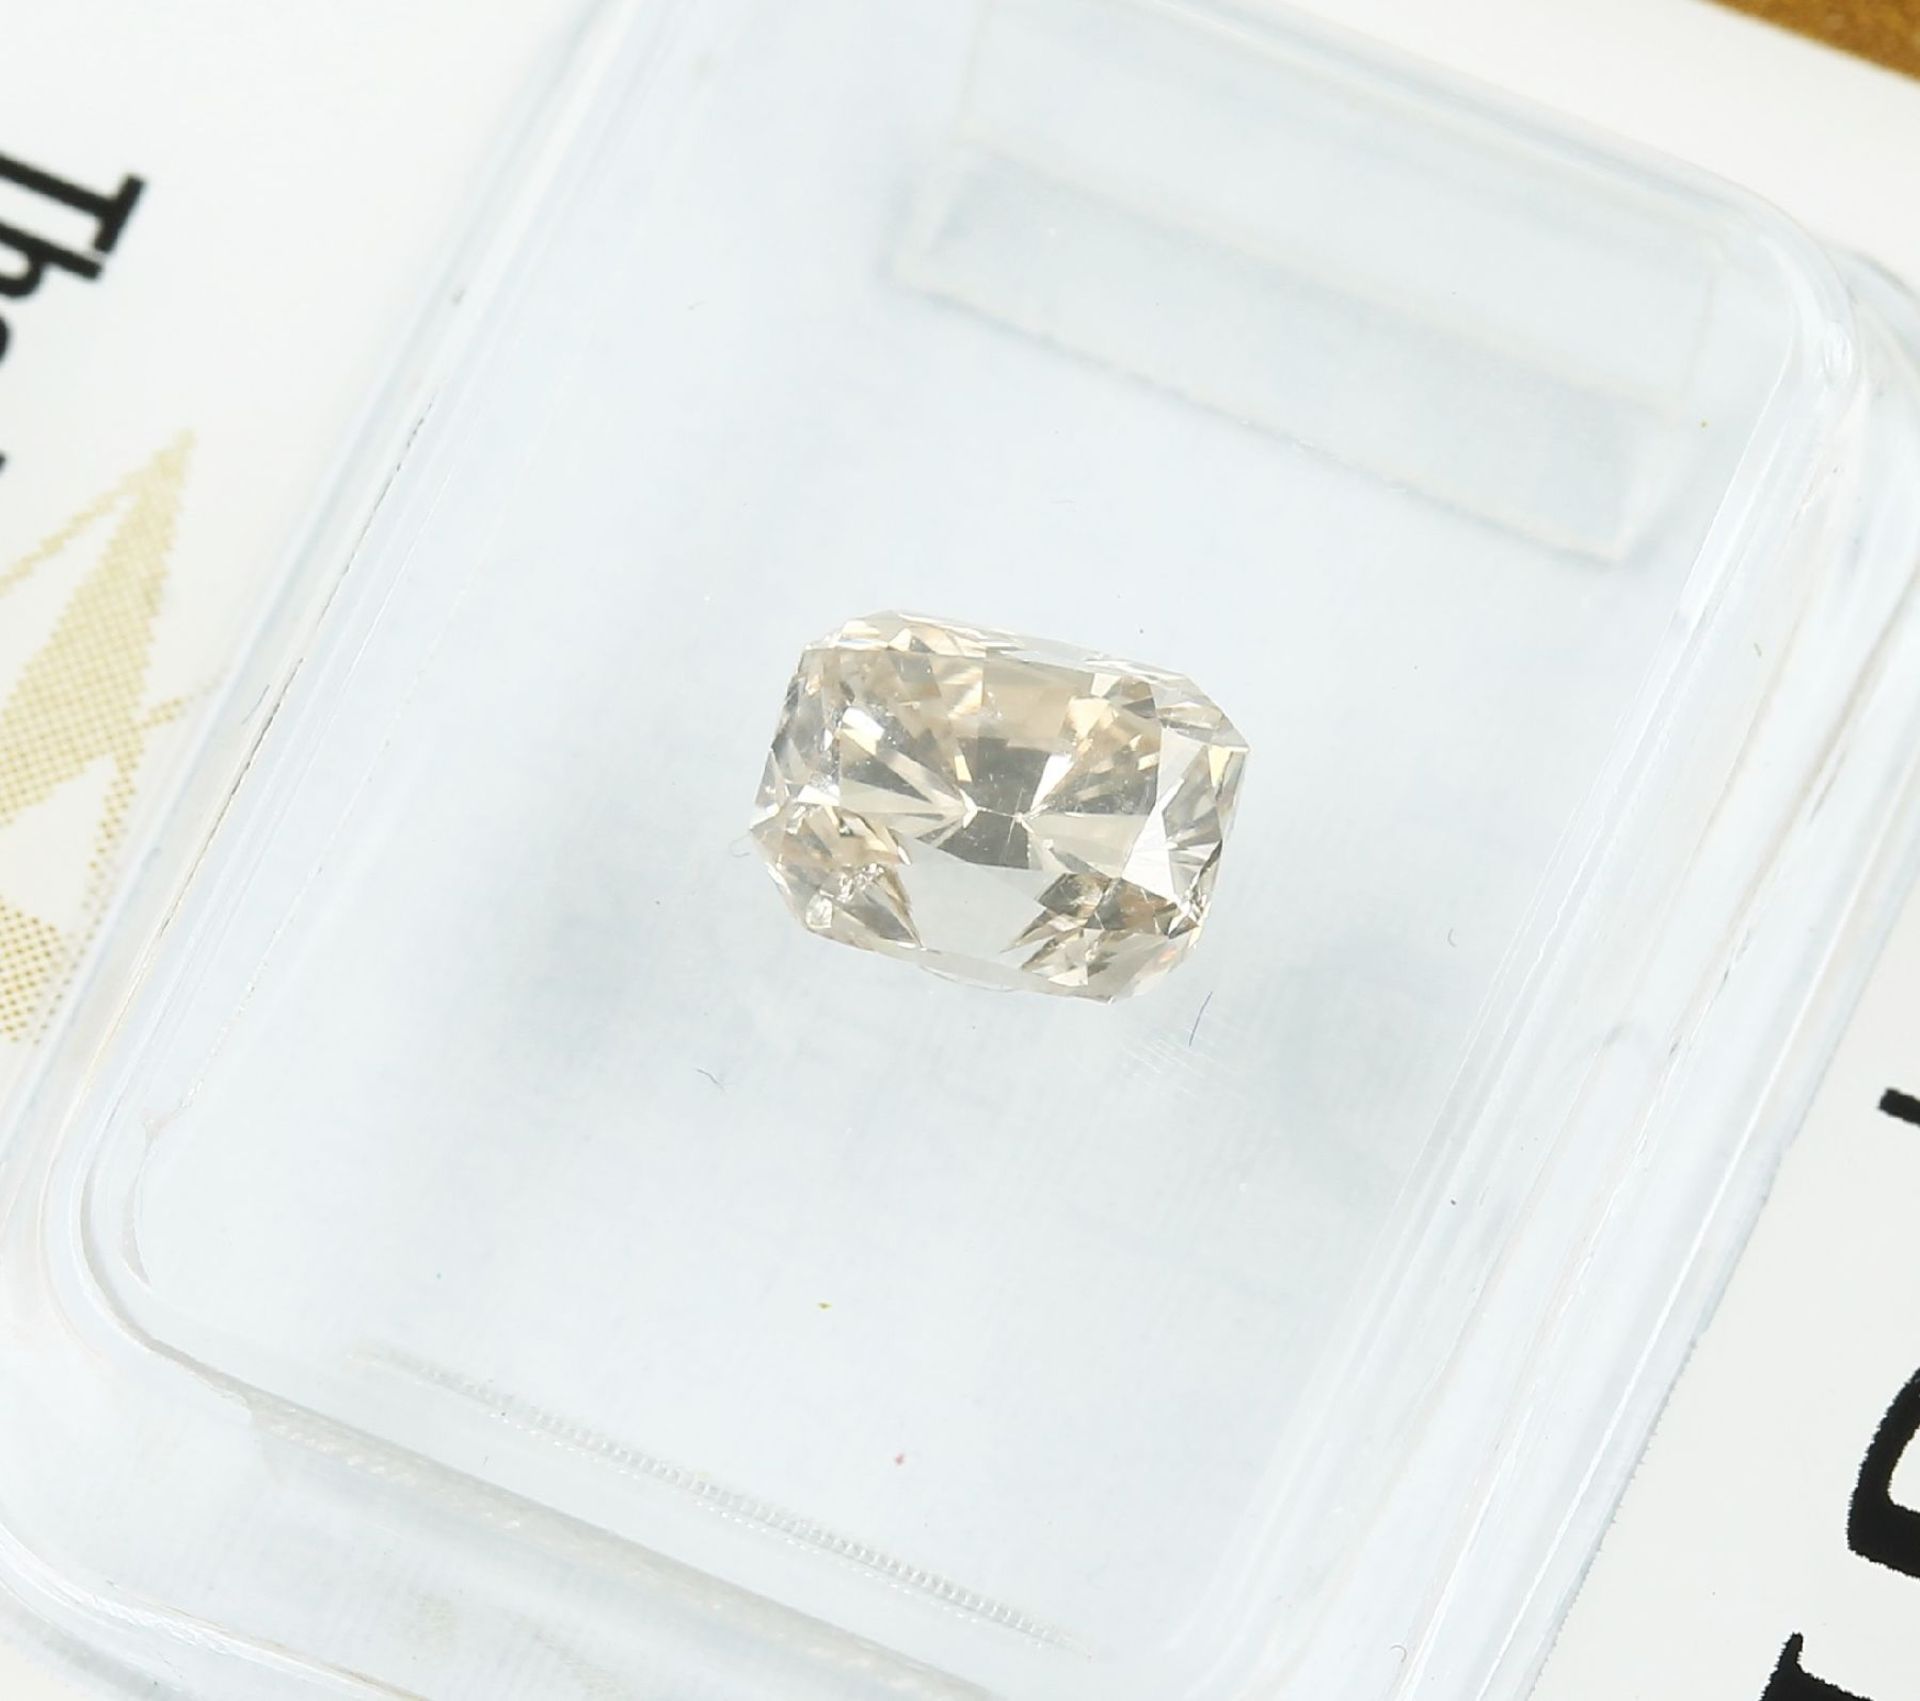 Loser Diamant, 0.91 ct Natural fancy light yellow-brown, rechteckig facett., 5.99 x 4.72 x 3.95 - Bild 3 aus 3